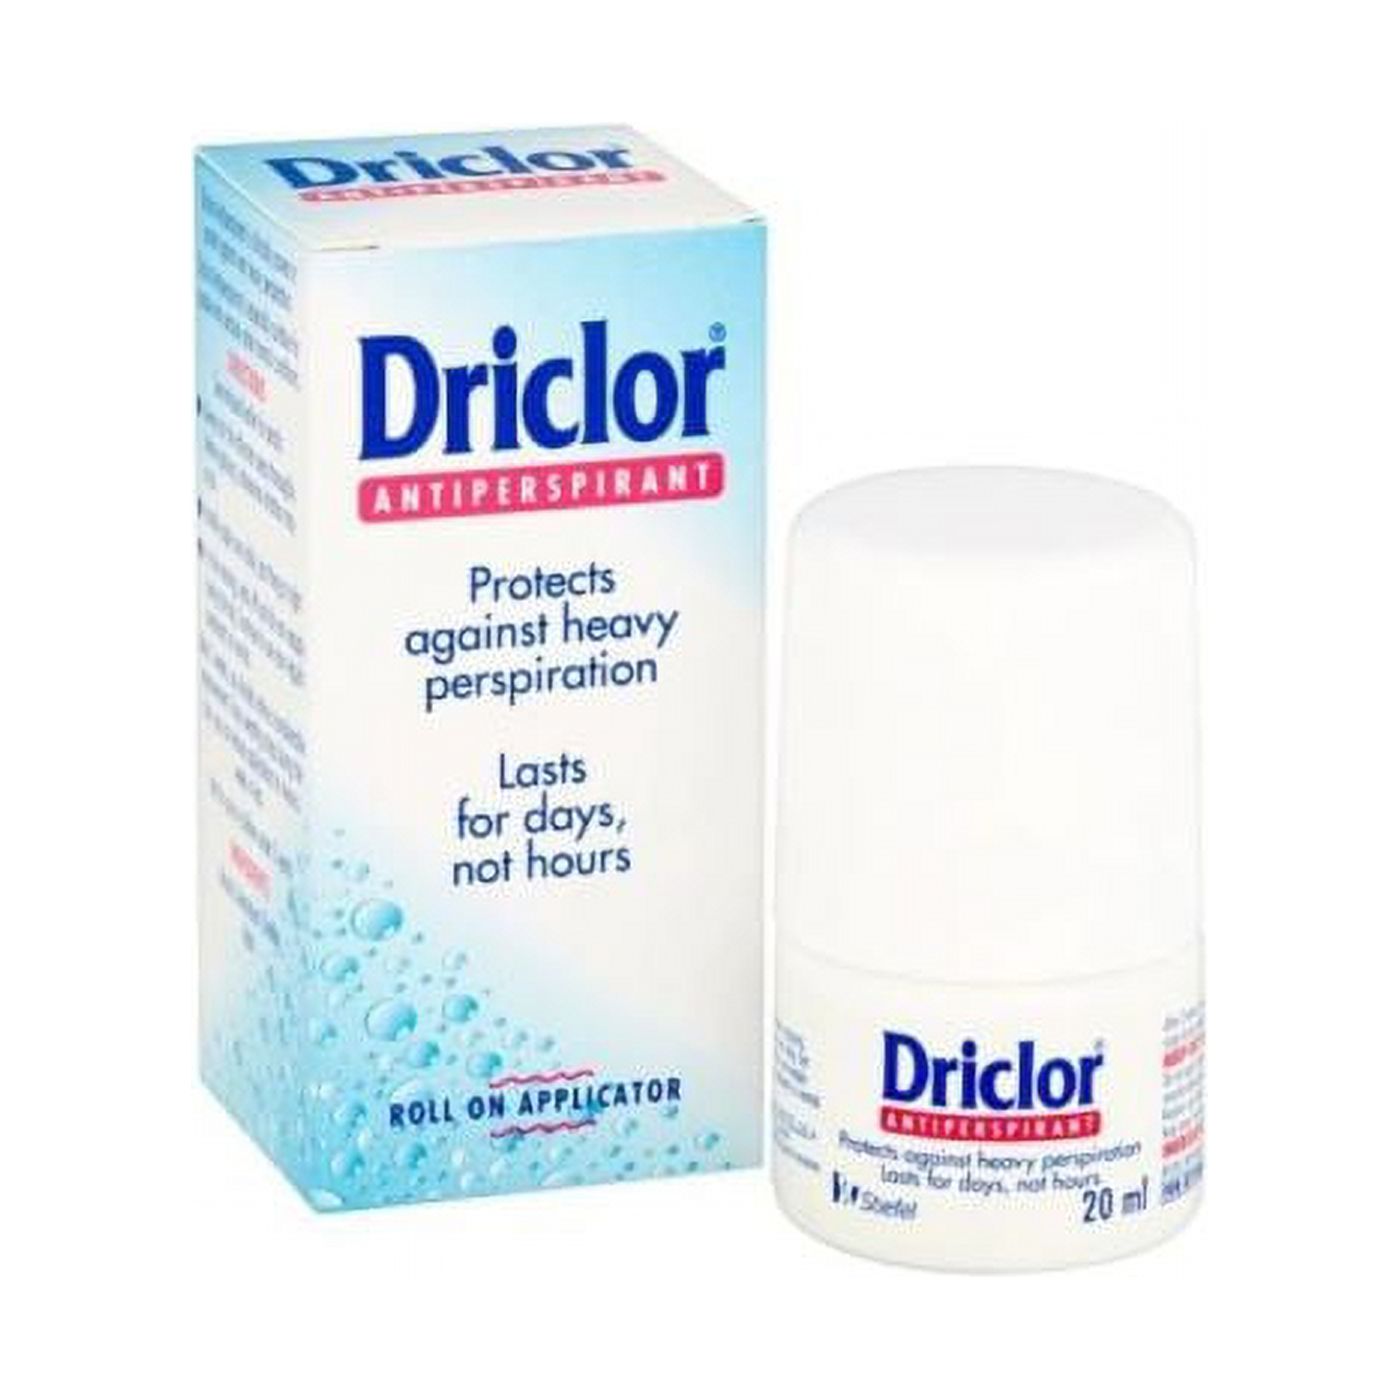 Driclor Antiperspirant Unisex Dry Roll-on Deodorant 20 ml. - image 1 of 6